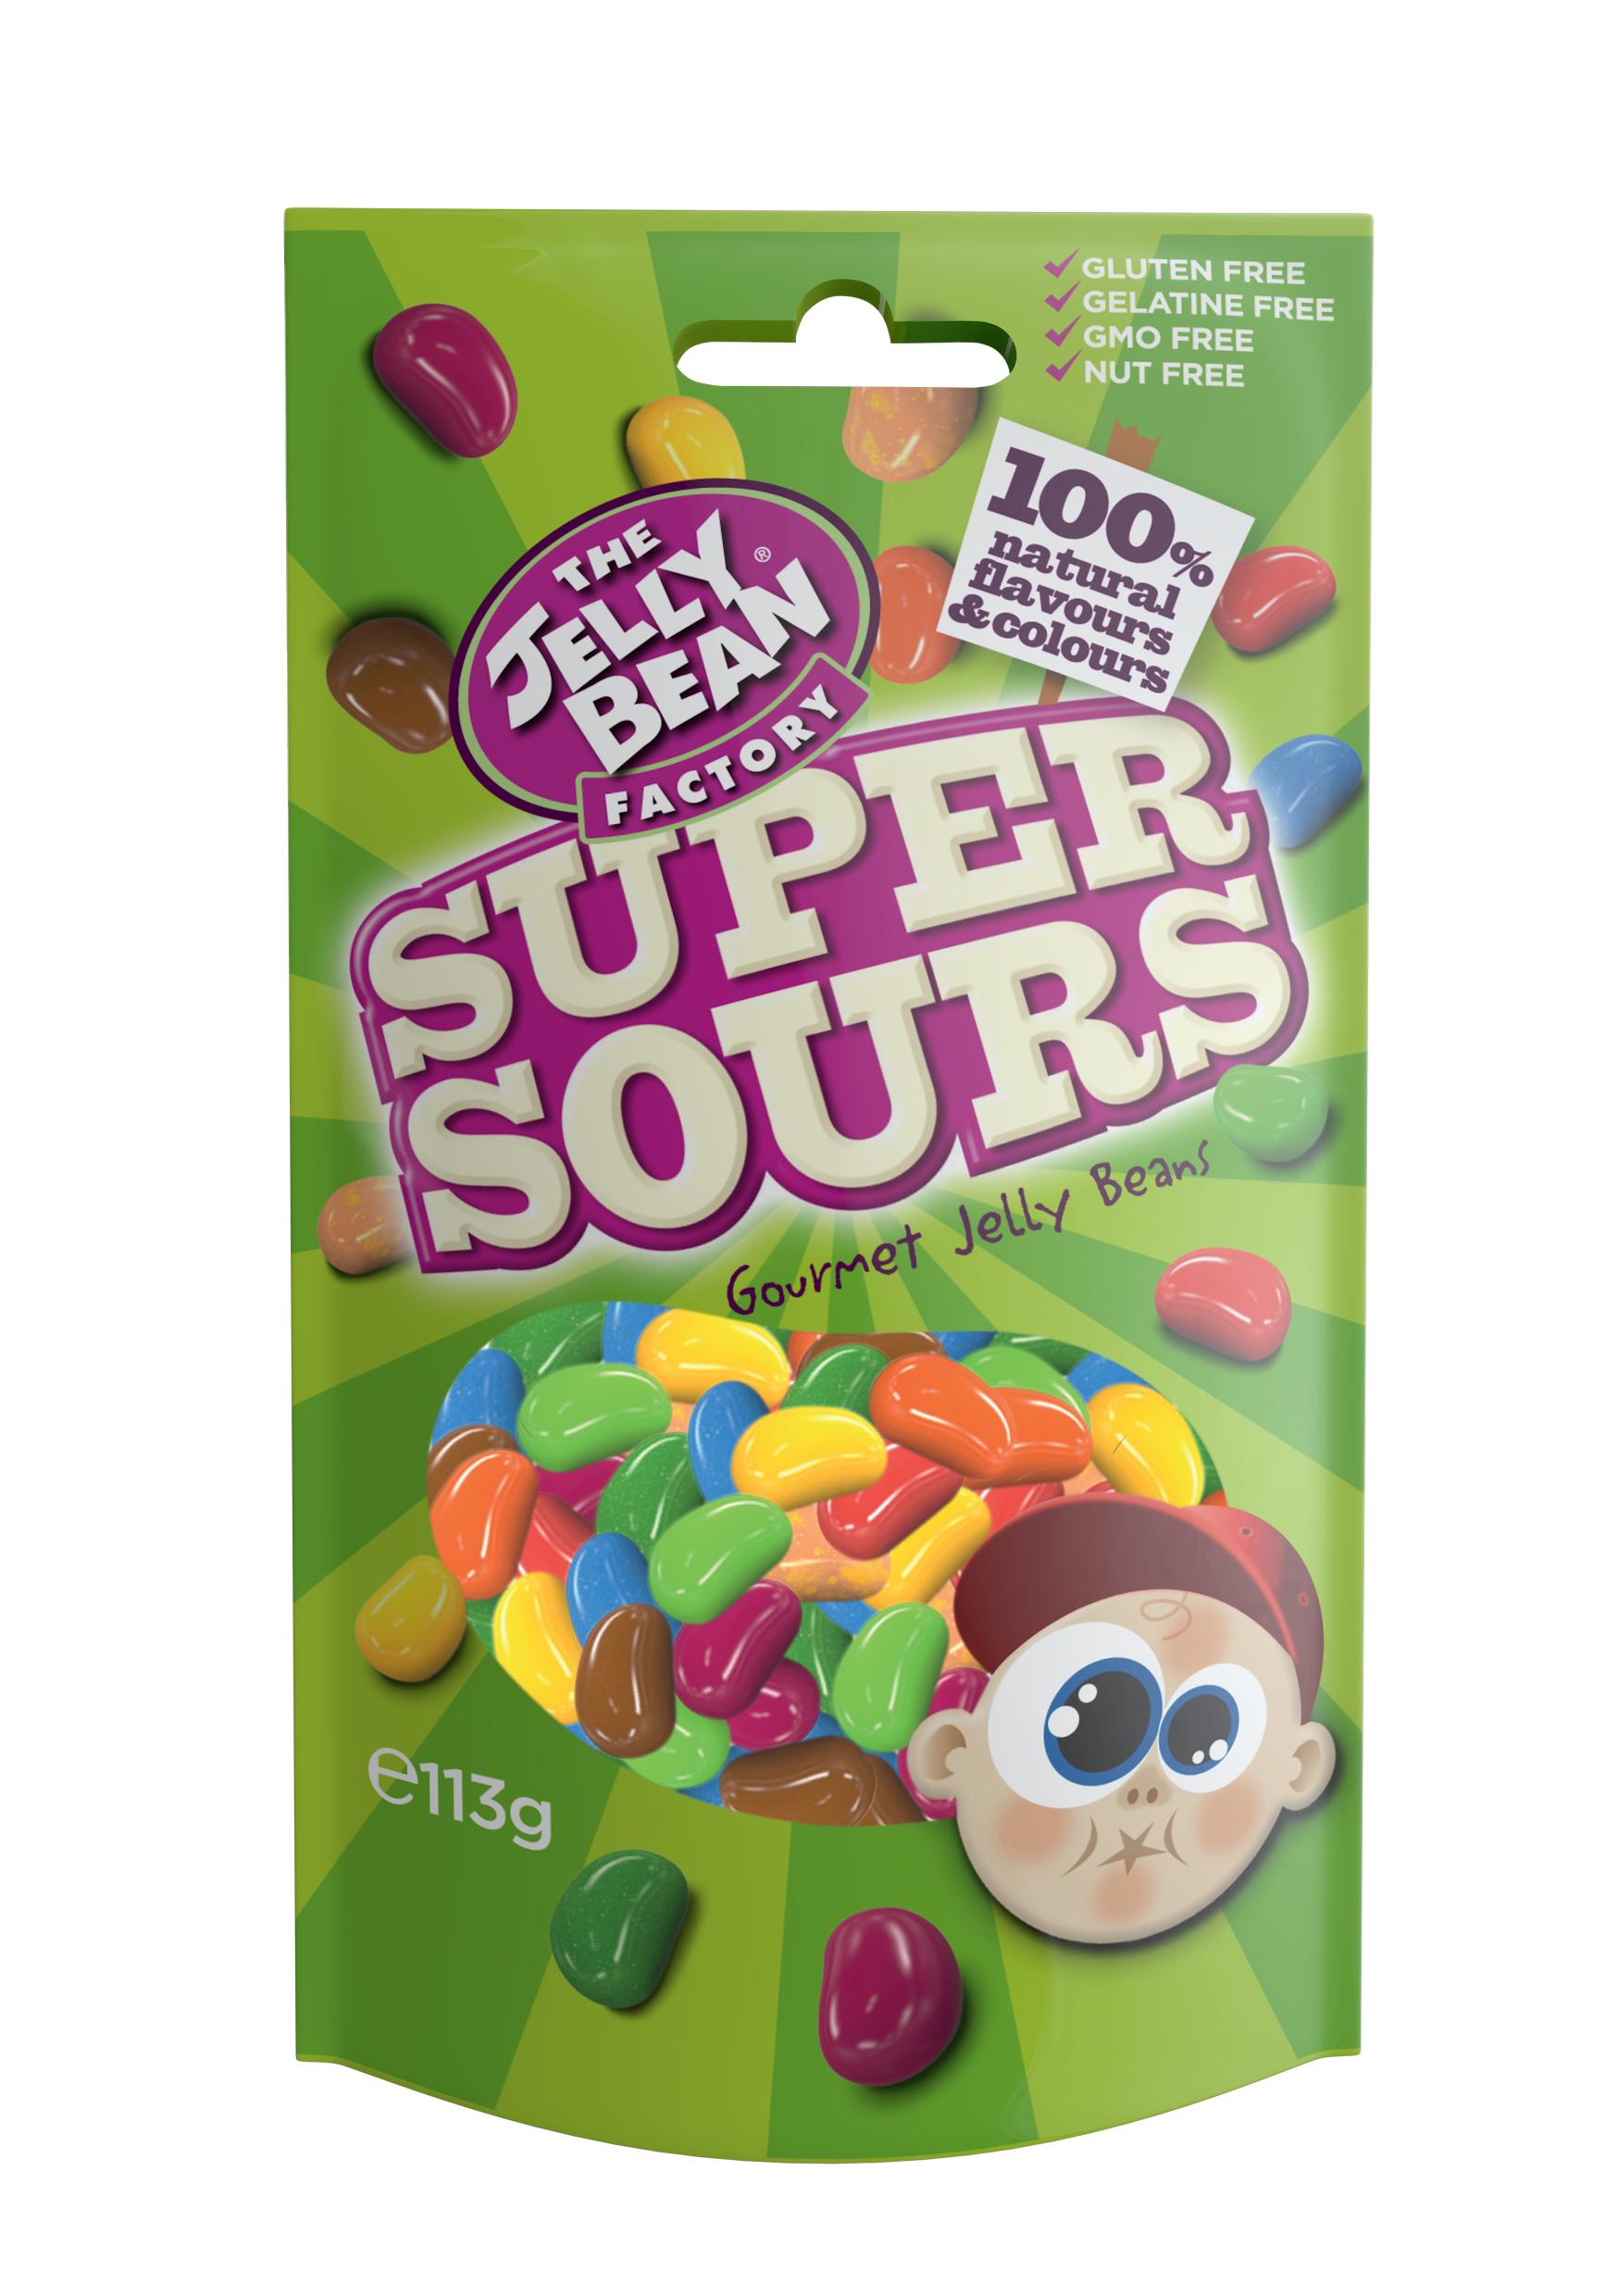 Super Sour Jelly Beans